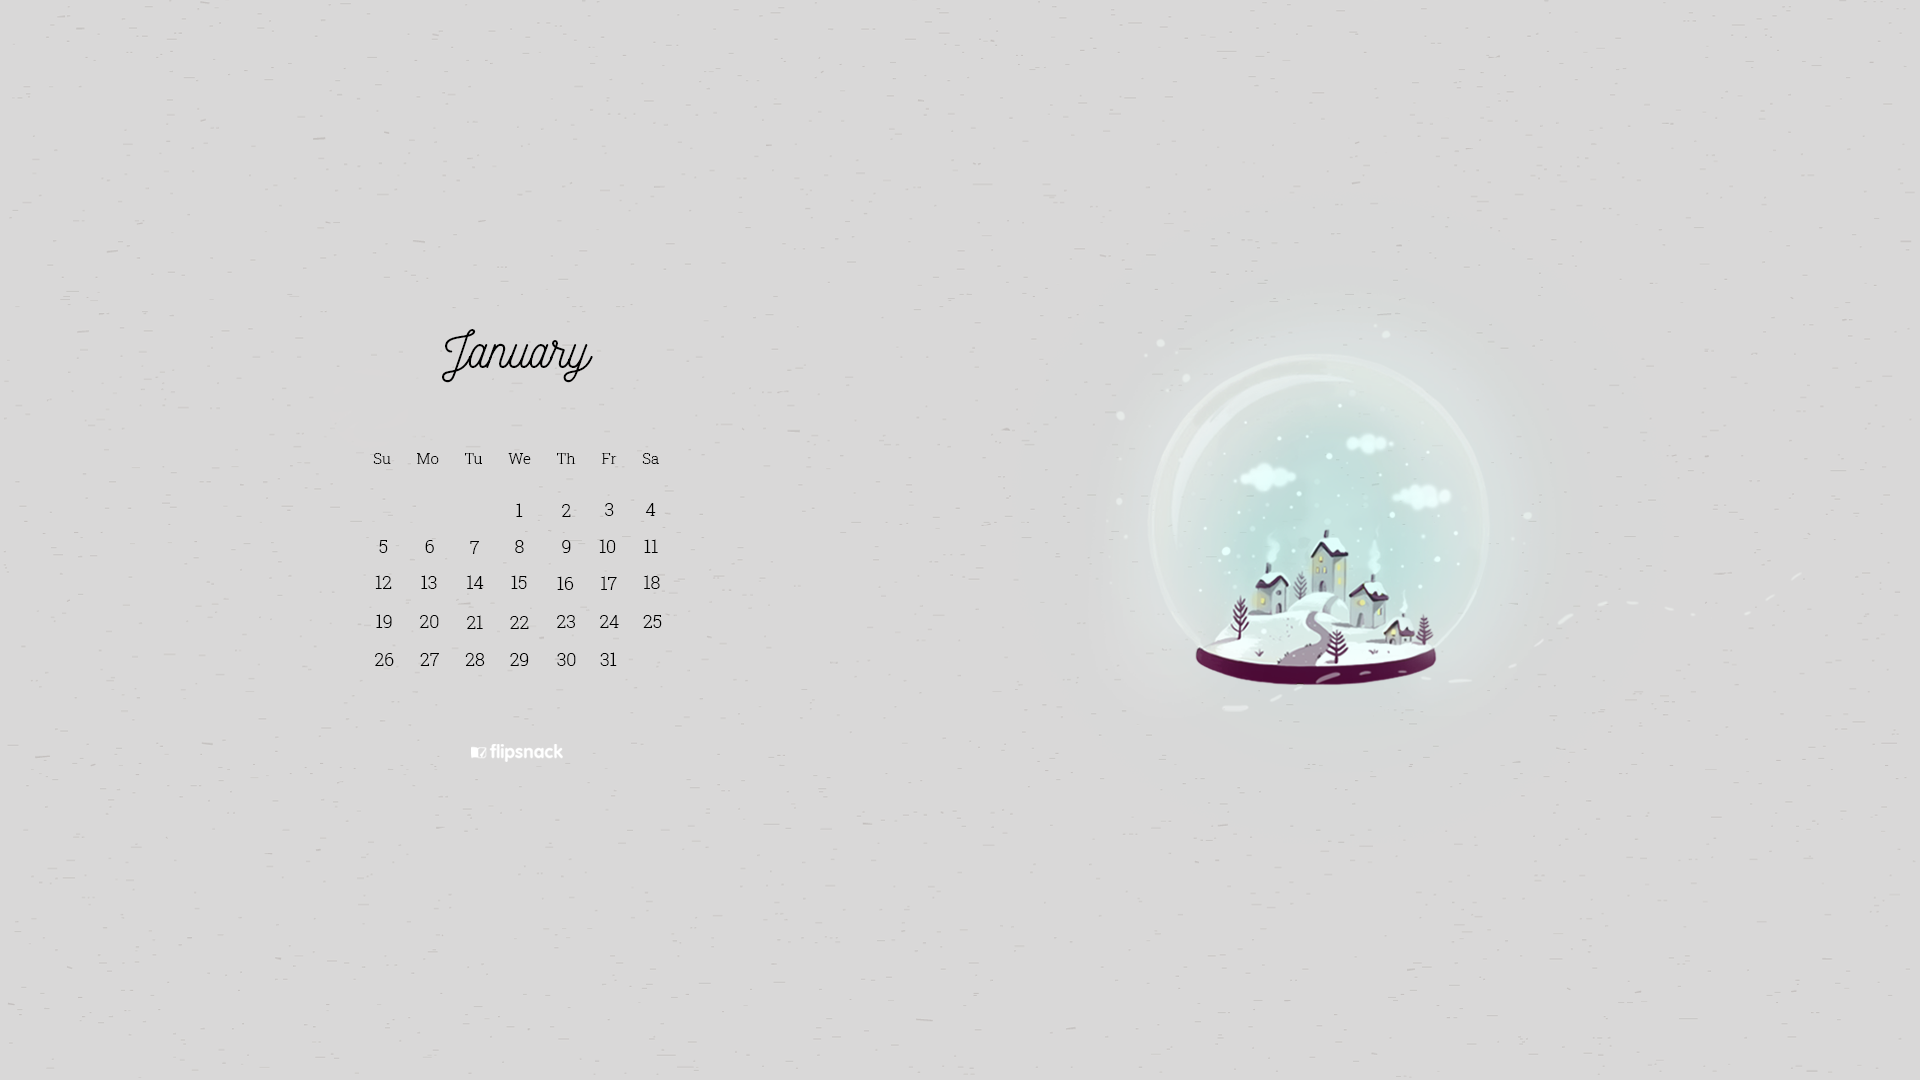 Free 2020 wallpaper calendars January   December   Flipsnack Blog